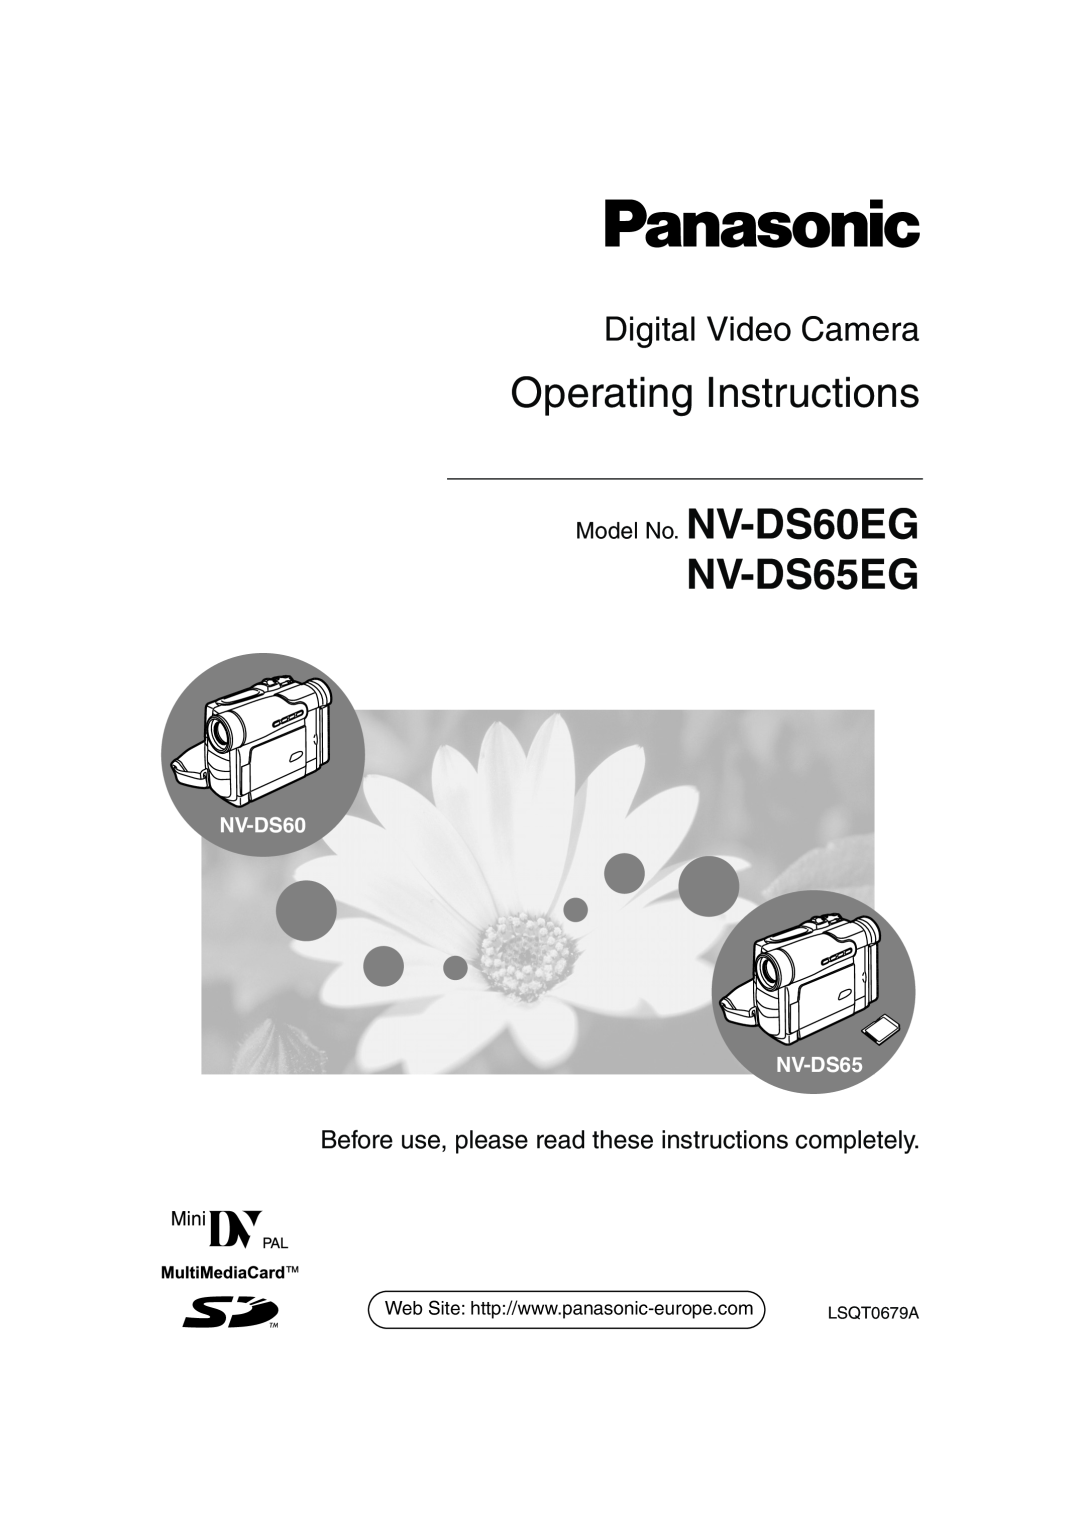 Panasonic operating instructions NV-DS60 NV-DS65, Operating Instructions, NV-DS65EG, Digital Video Camera 